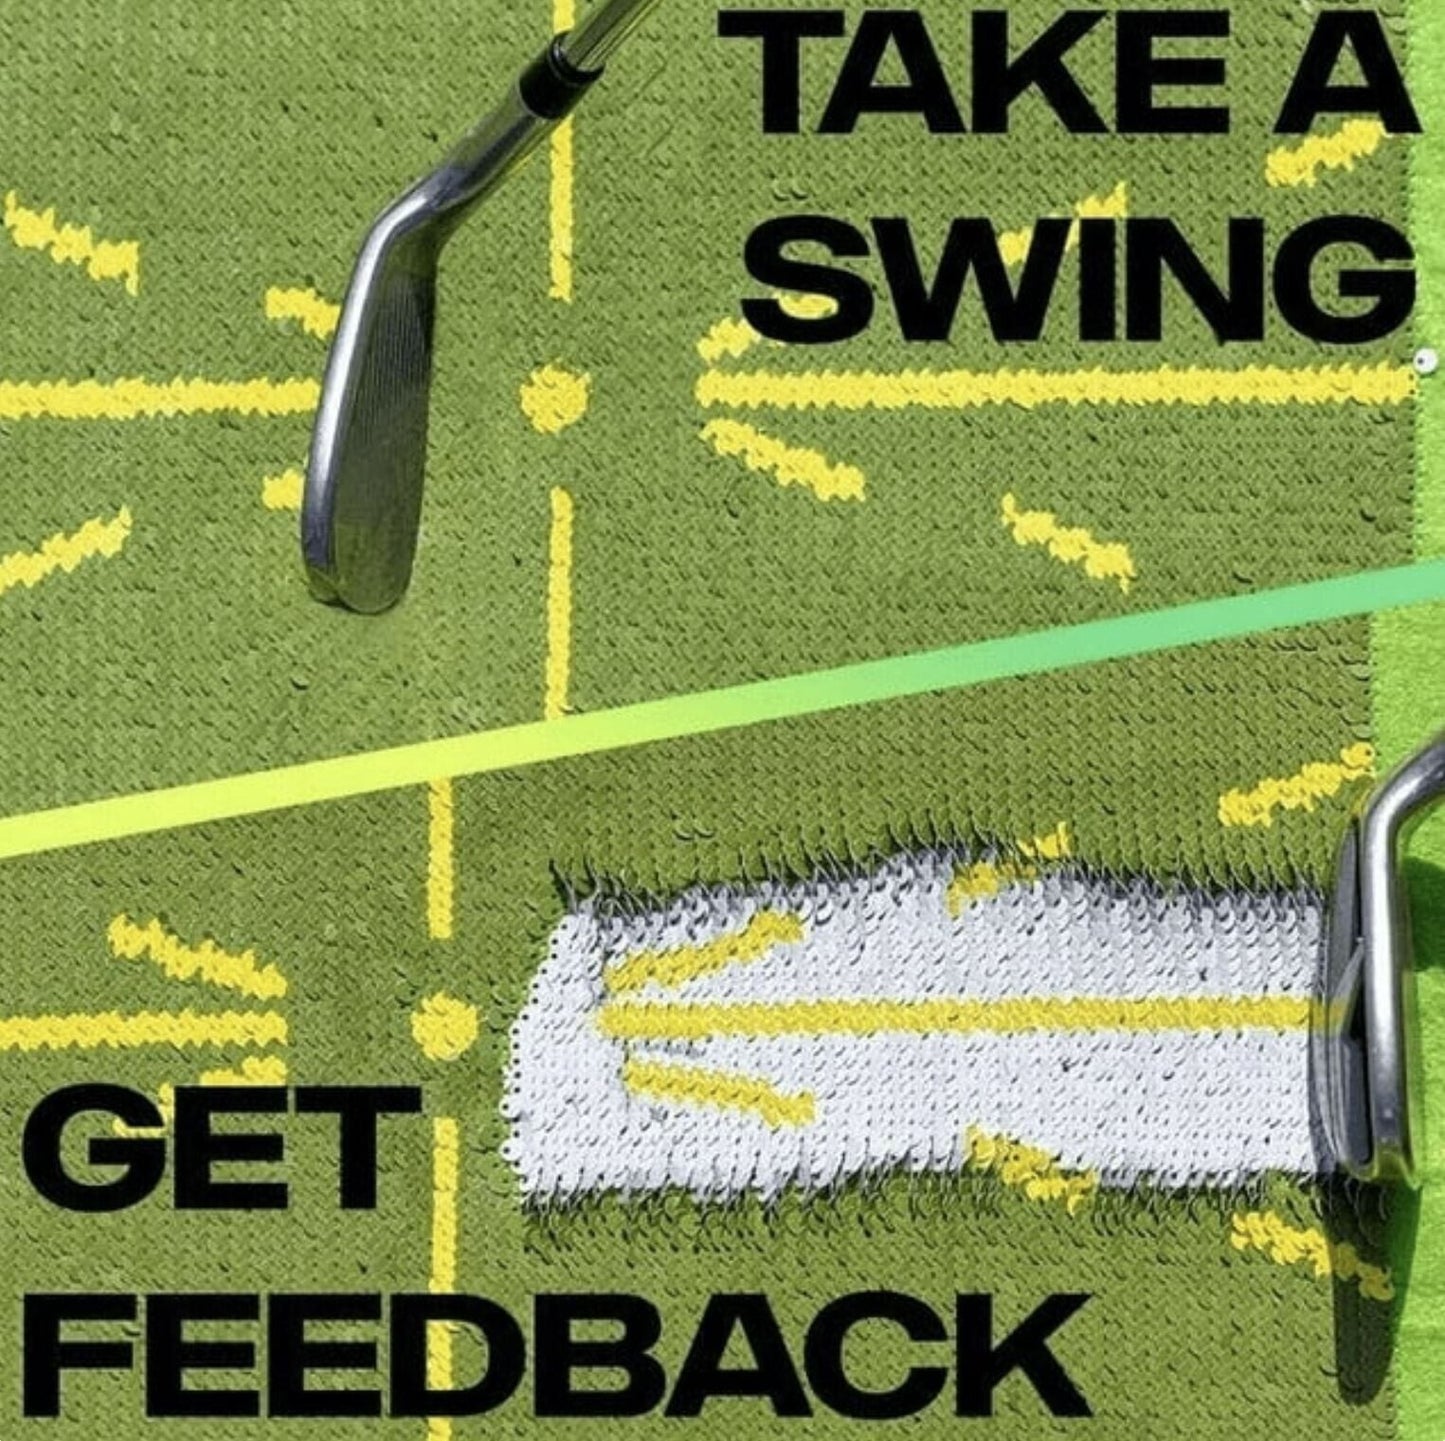 ProShot Golf Training Mat